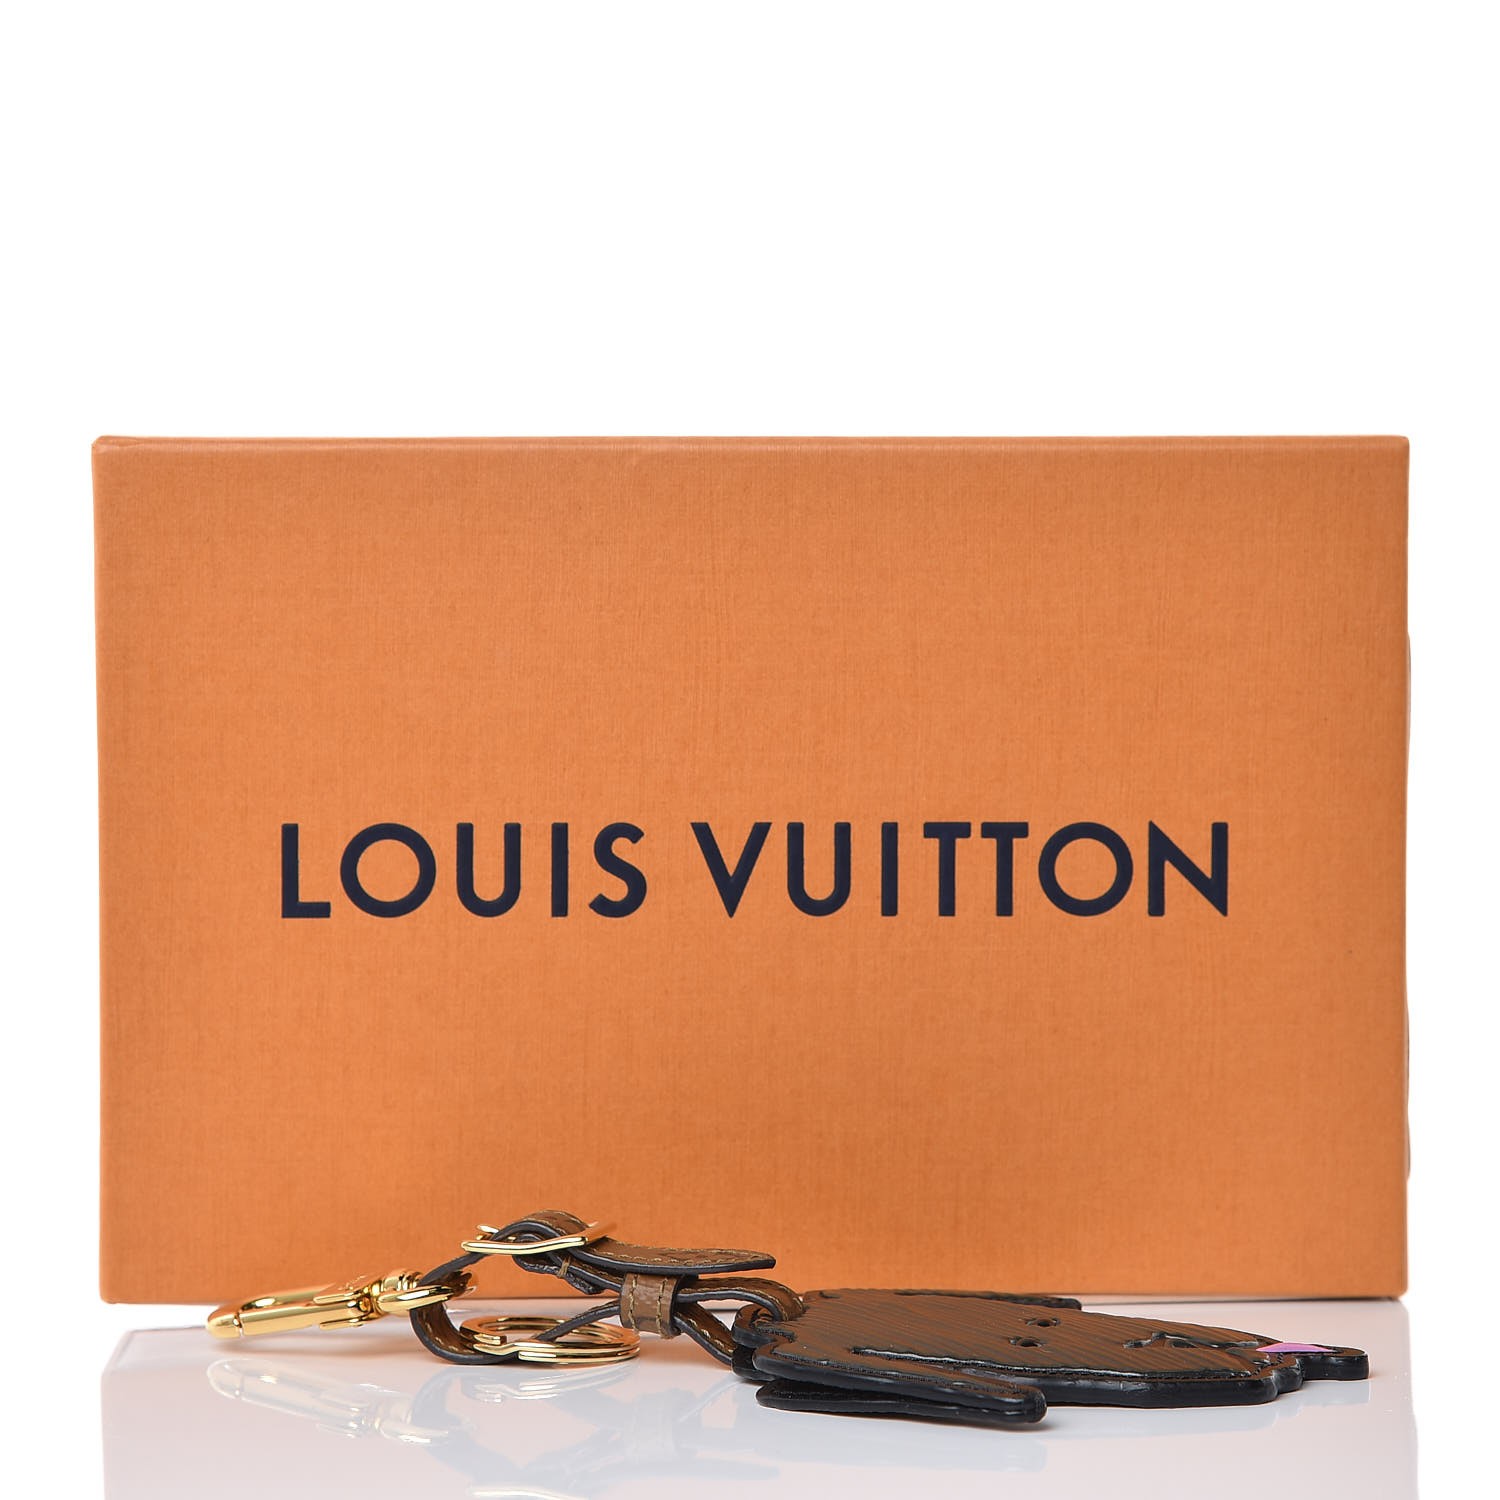 Louis Vuitton // Monogram Portukure Upside Down Bag Charm Key